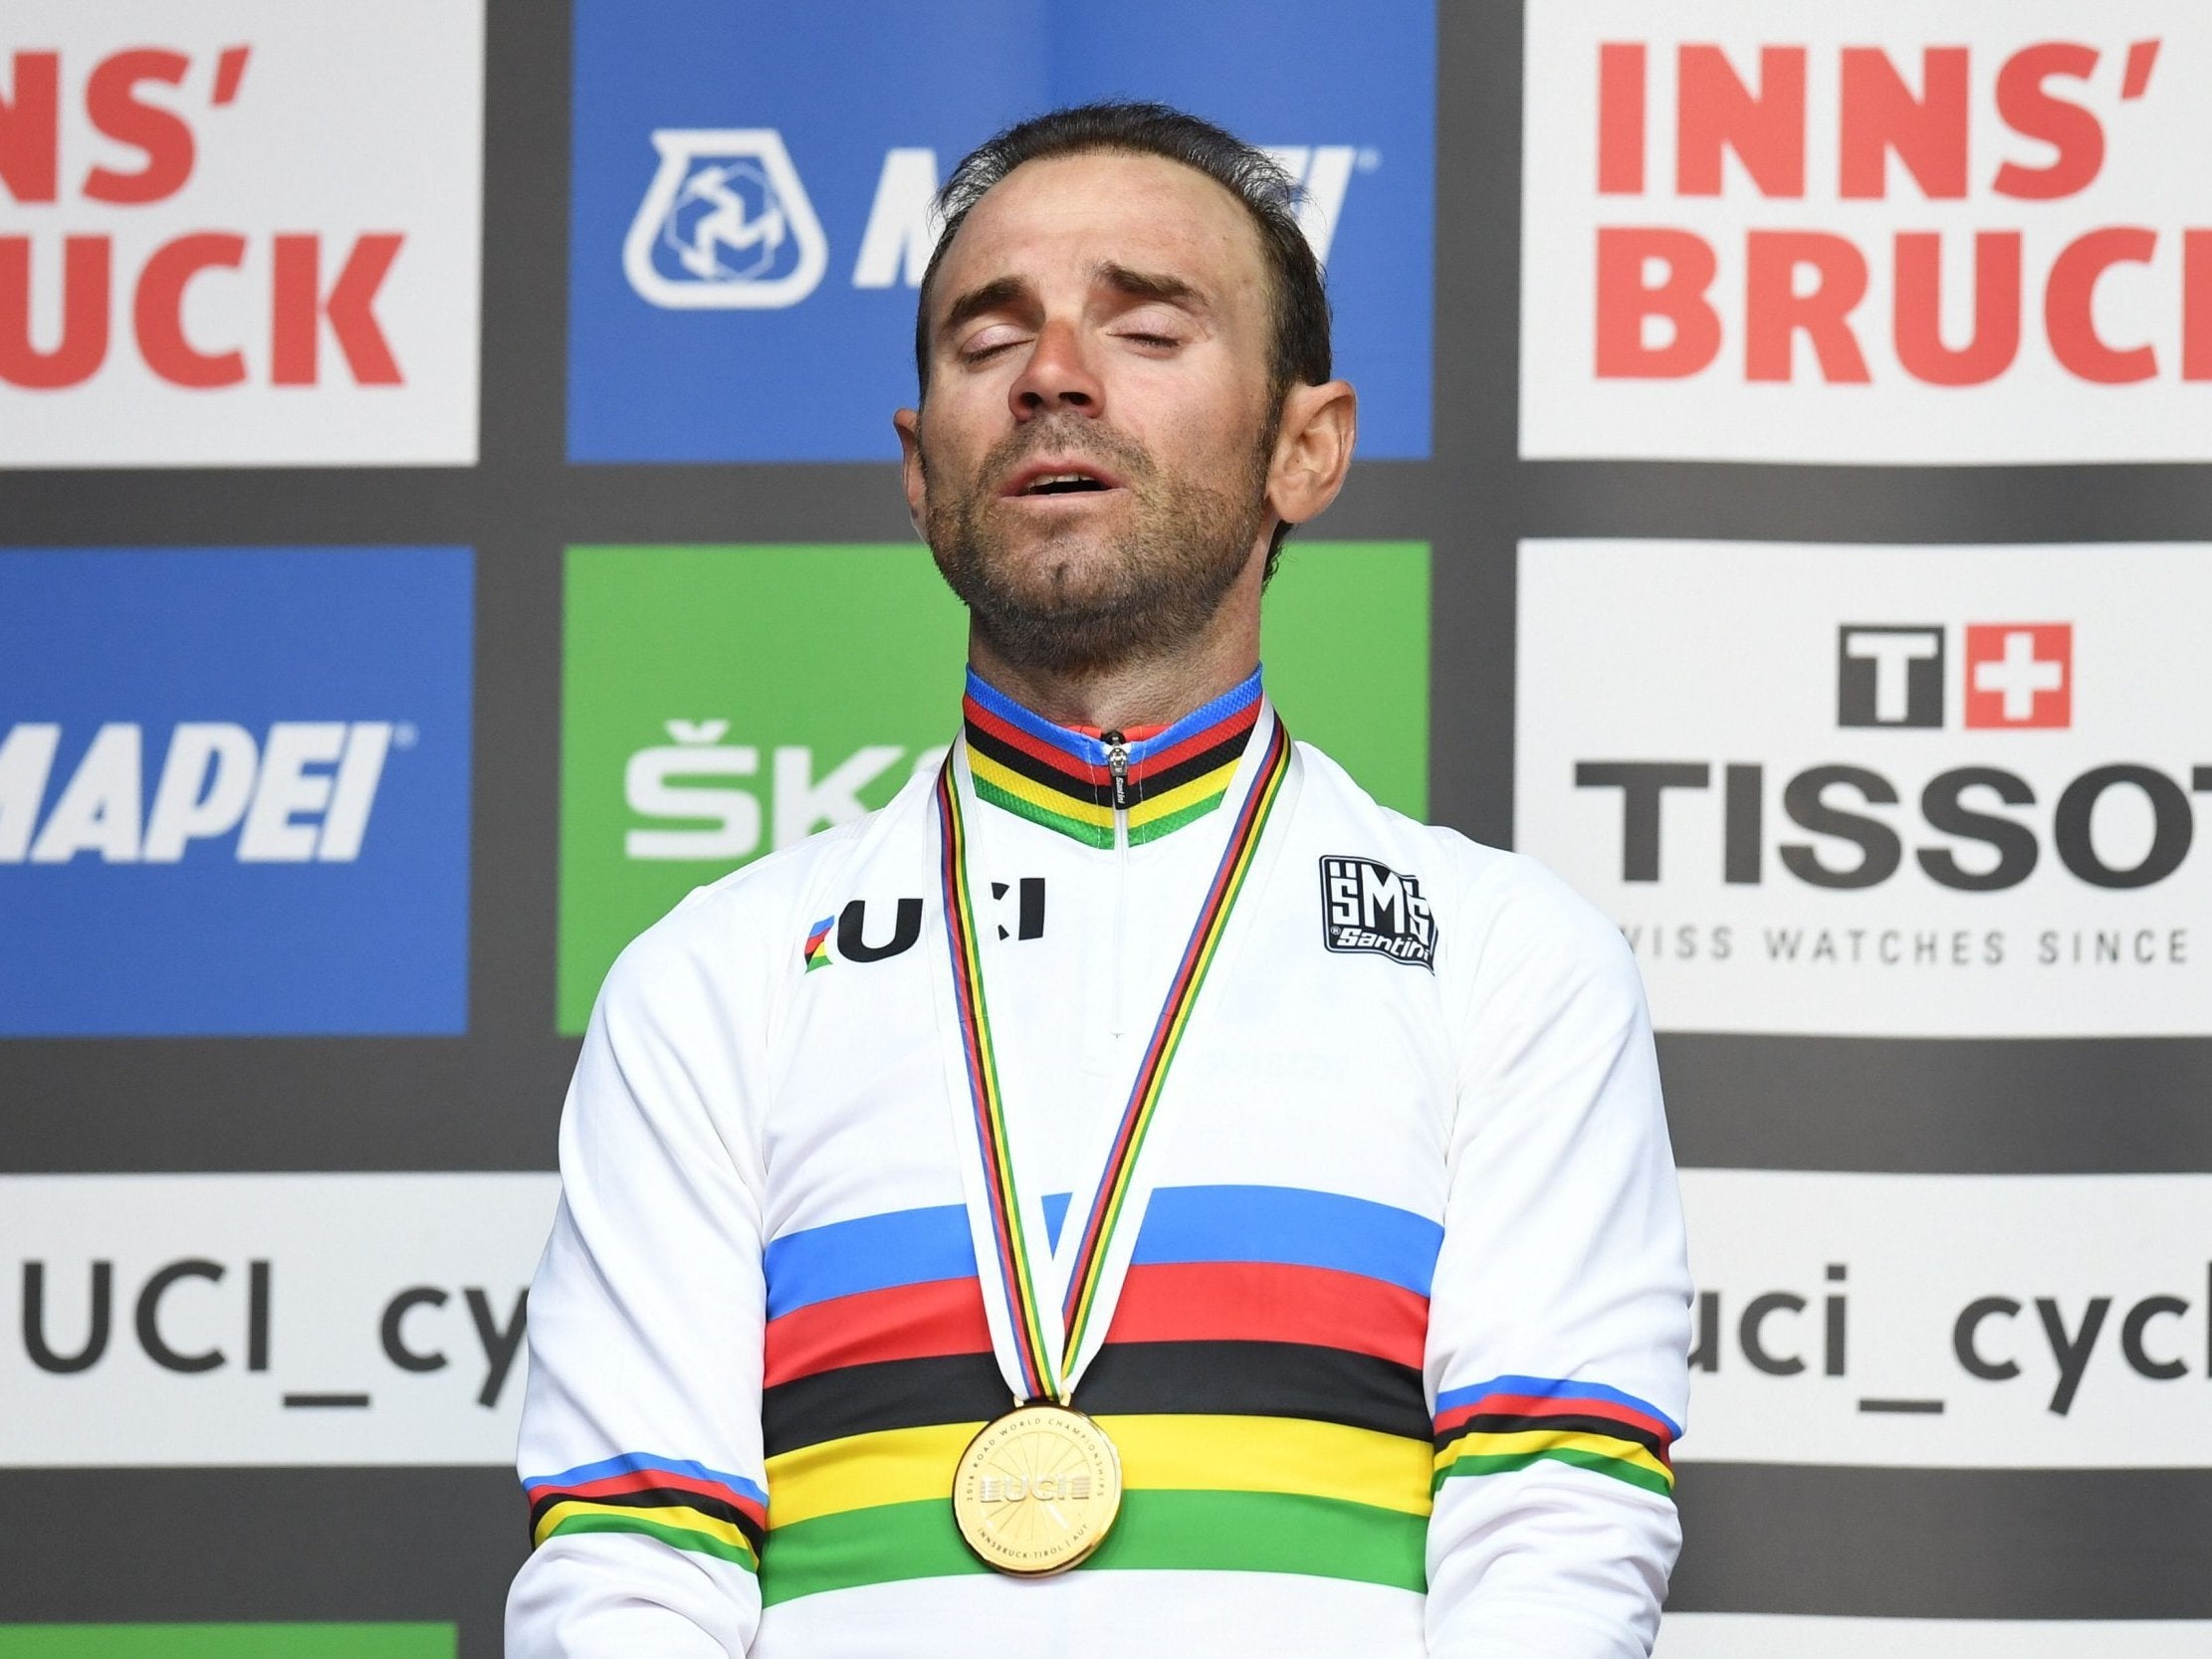 Alejandro Valverde showed his emotion on the podium